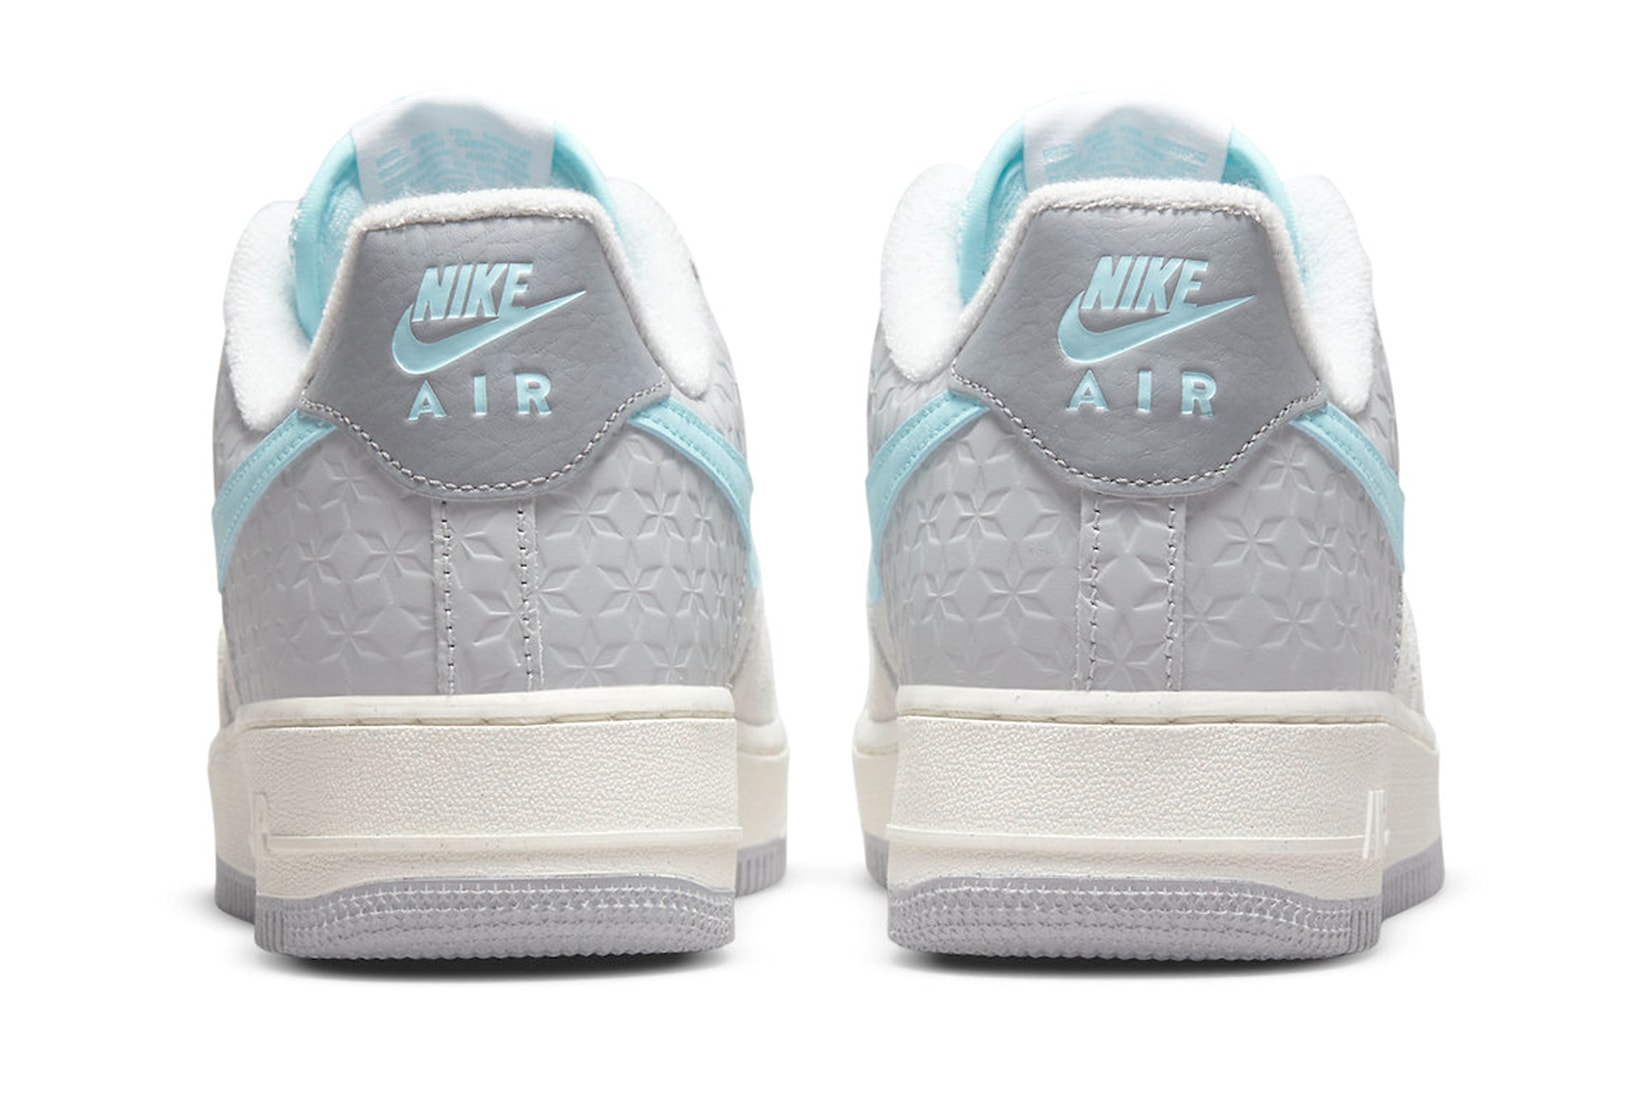 Nike Air Force 1 Low "Snowflake" Sneakers Blue White Gray Heel View